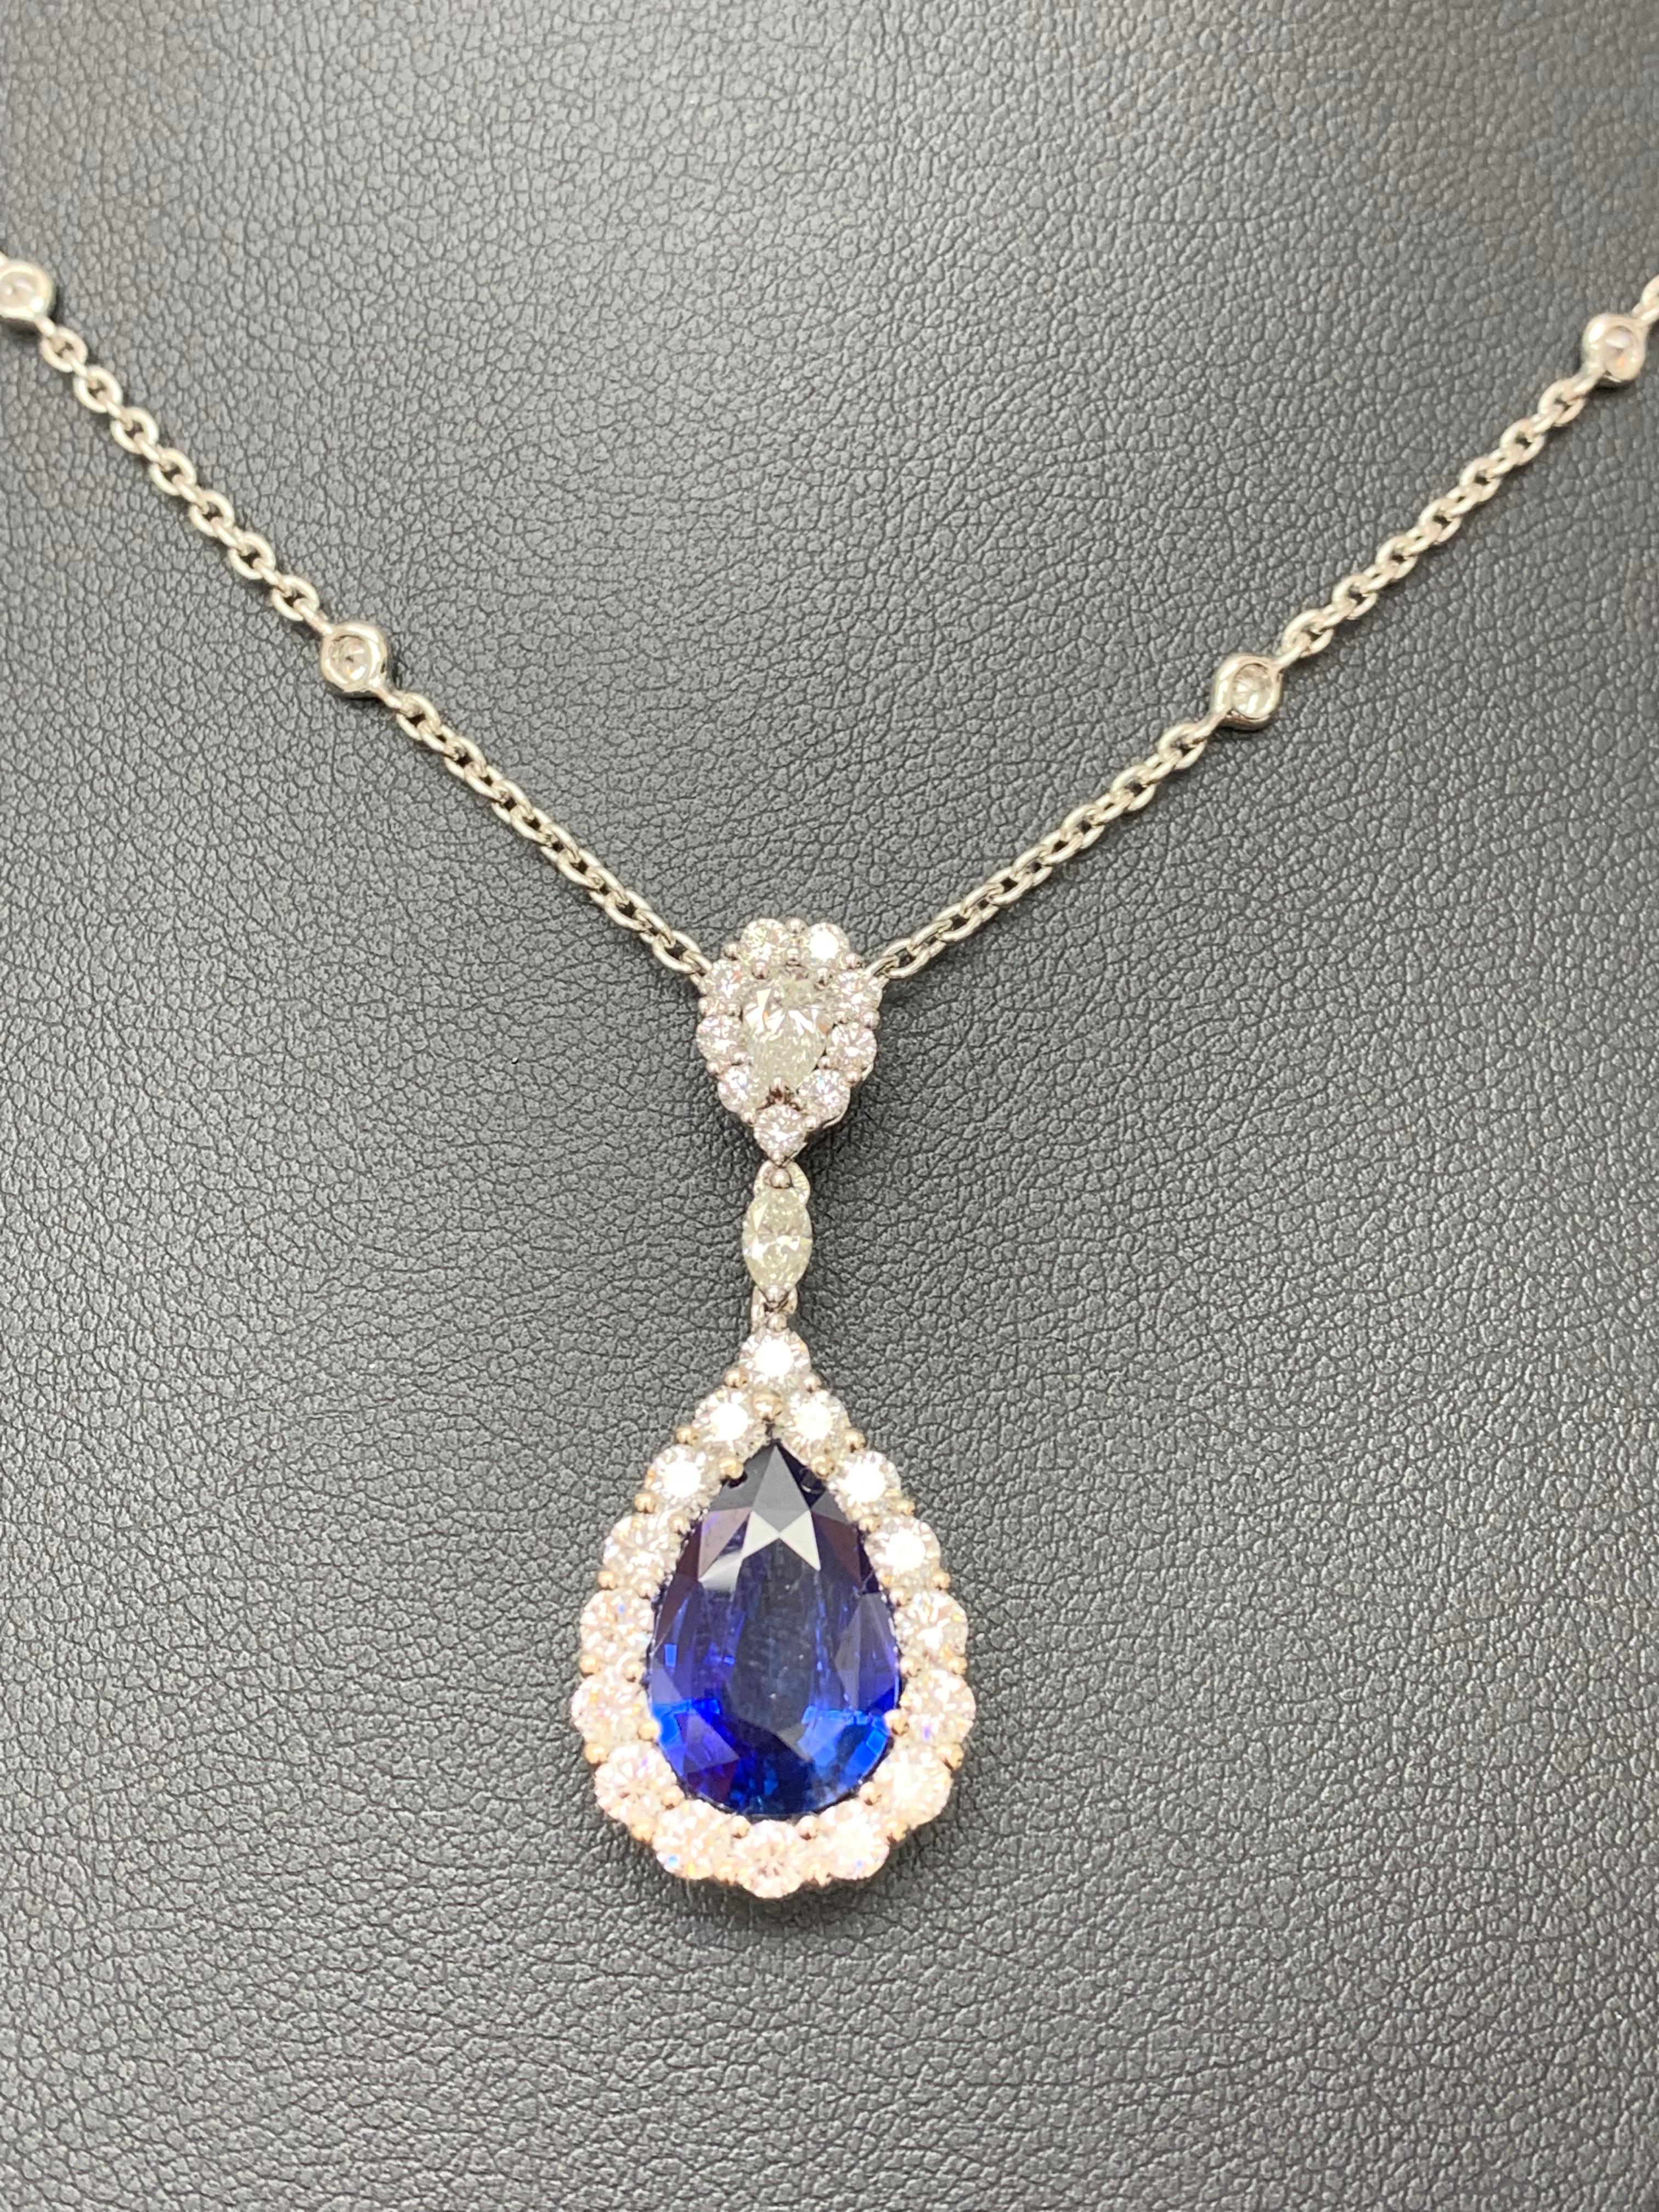 5.10 Carat Pear Shape Blue Saphire and Diamond Halo Drop Pendant Necklace For Sale 5